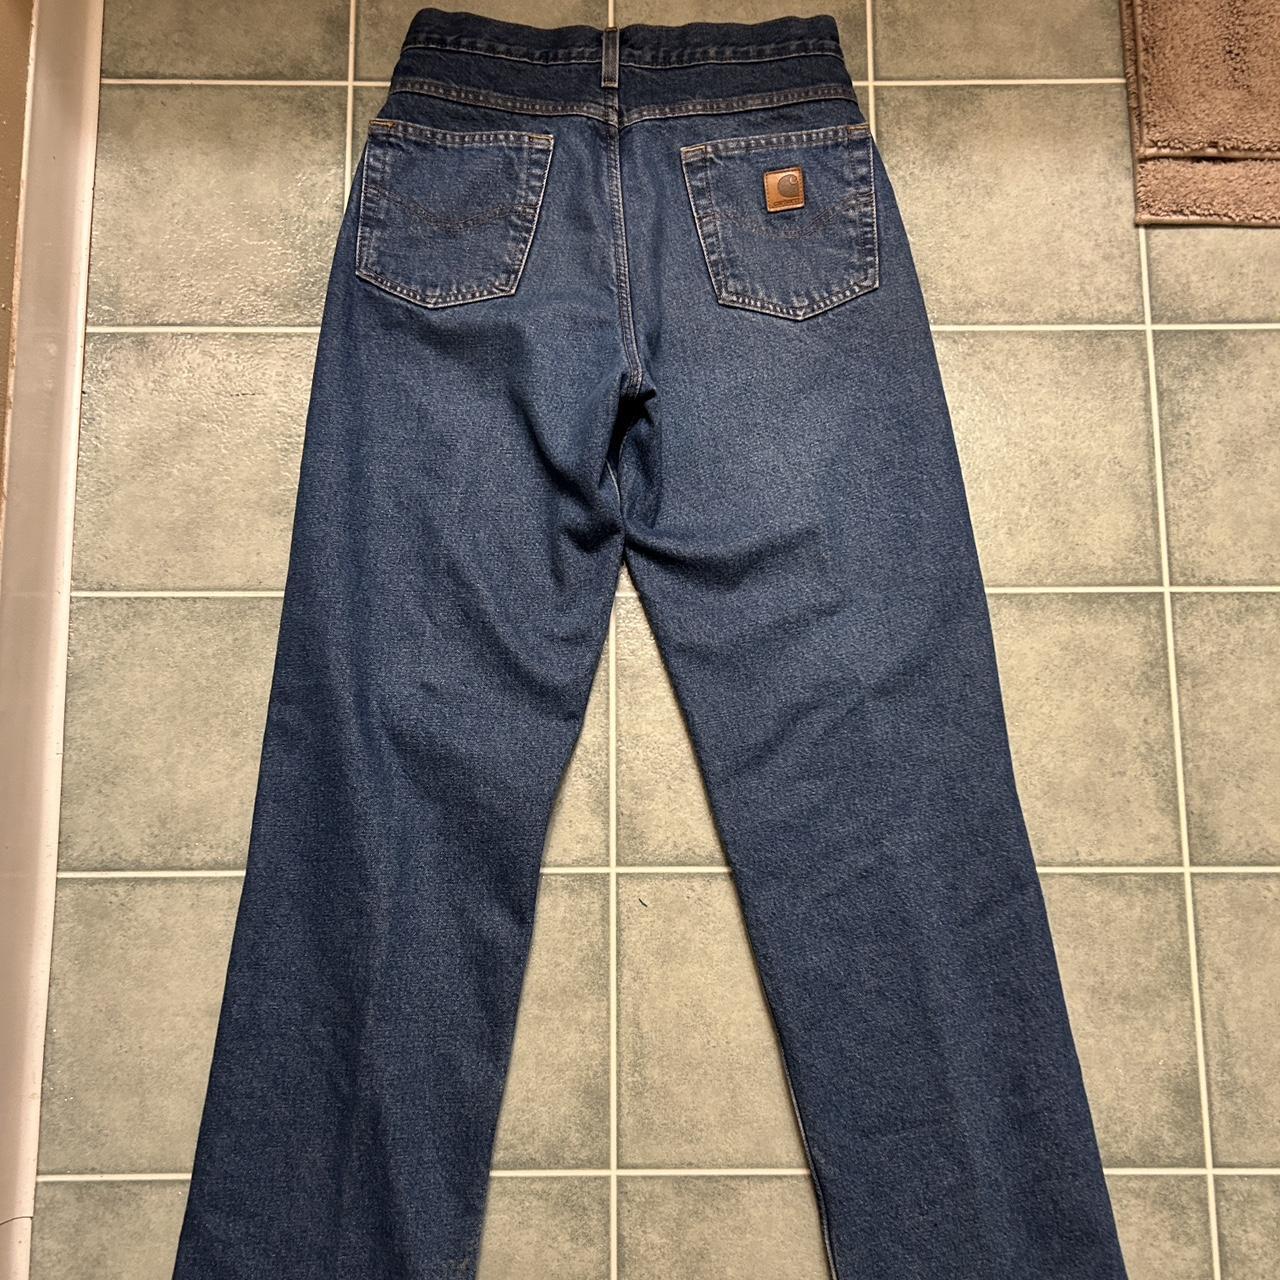 Relaxed Fit Fleece Lined Carhartt Jeans 30x34 - Depop